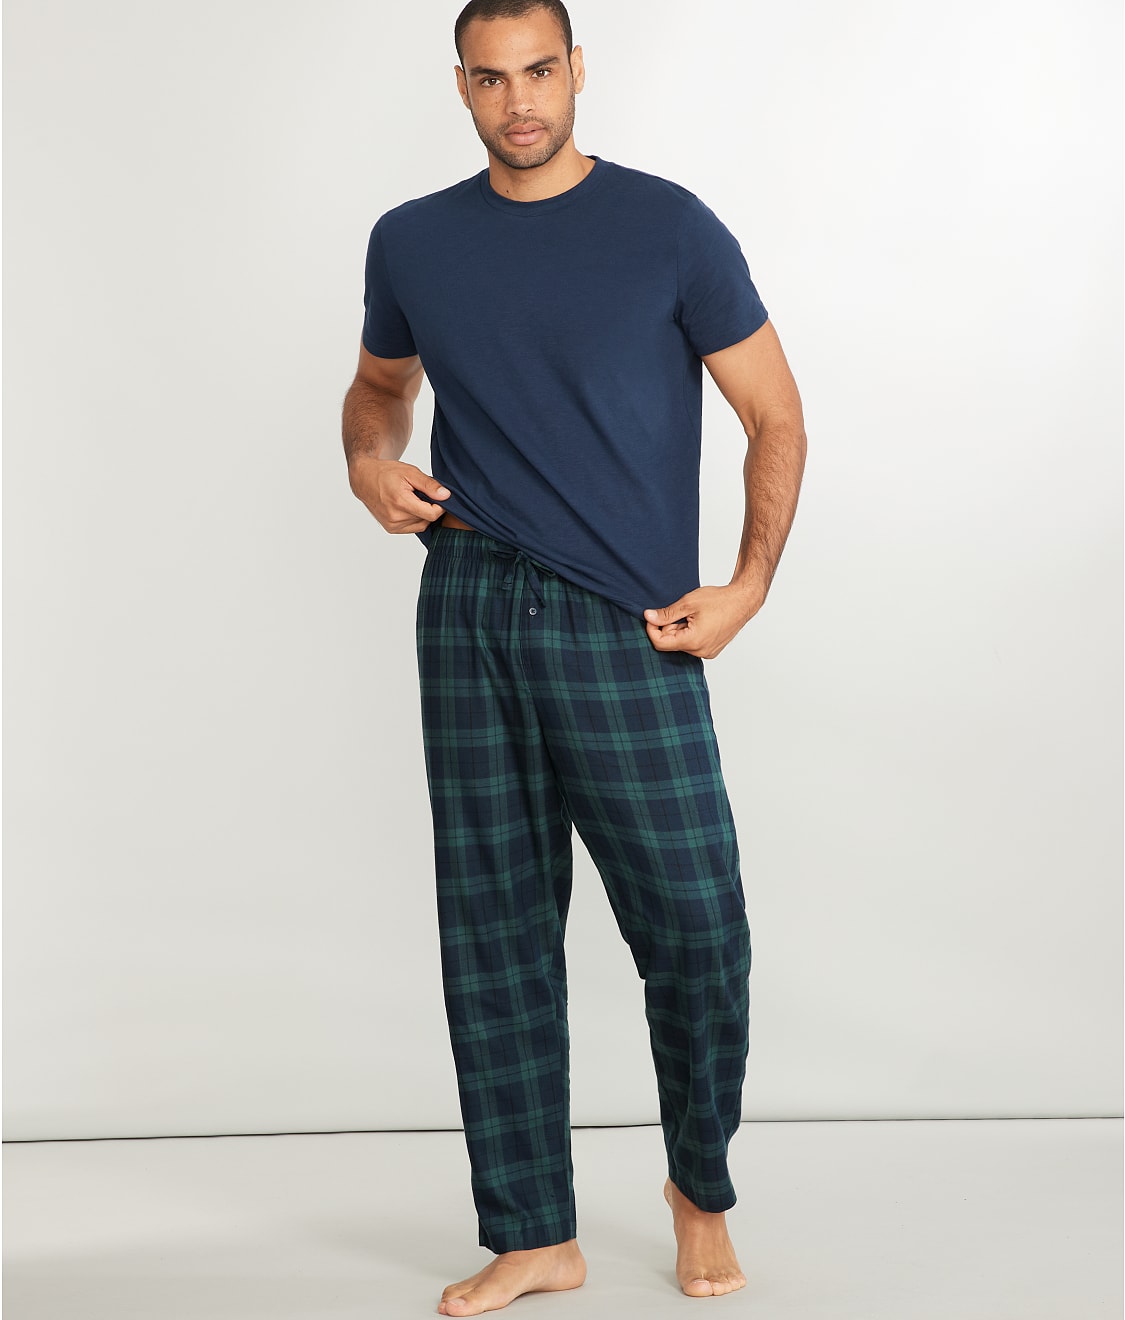 Bare: The Cozy Men's Brushed Cotton Pajama Set D30419